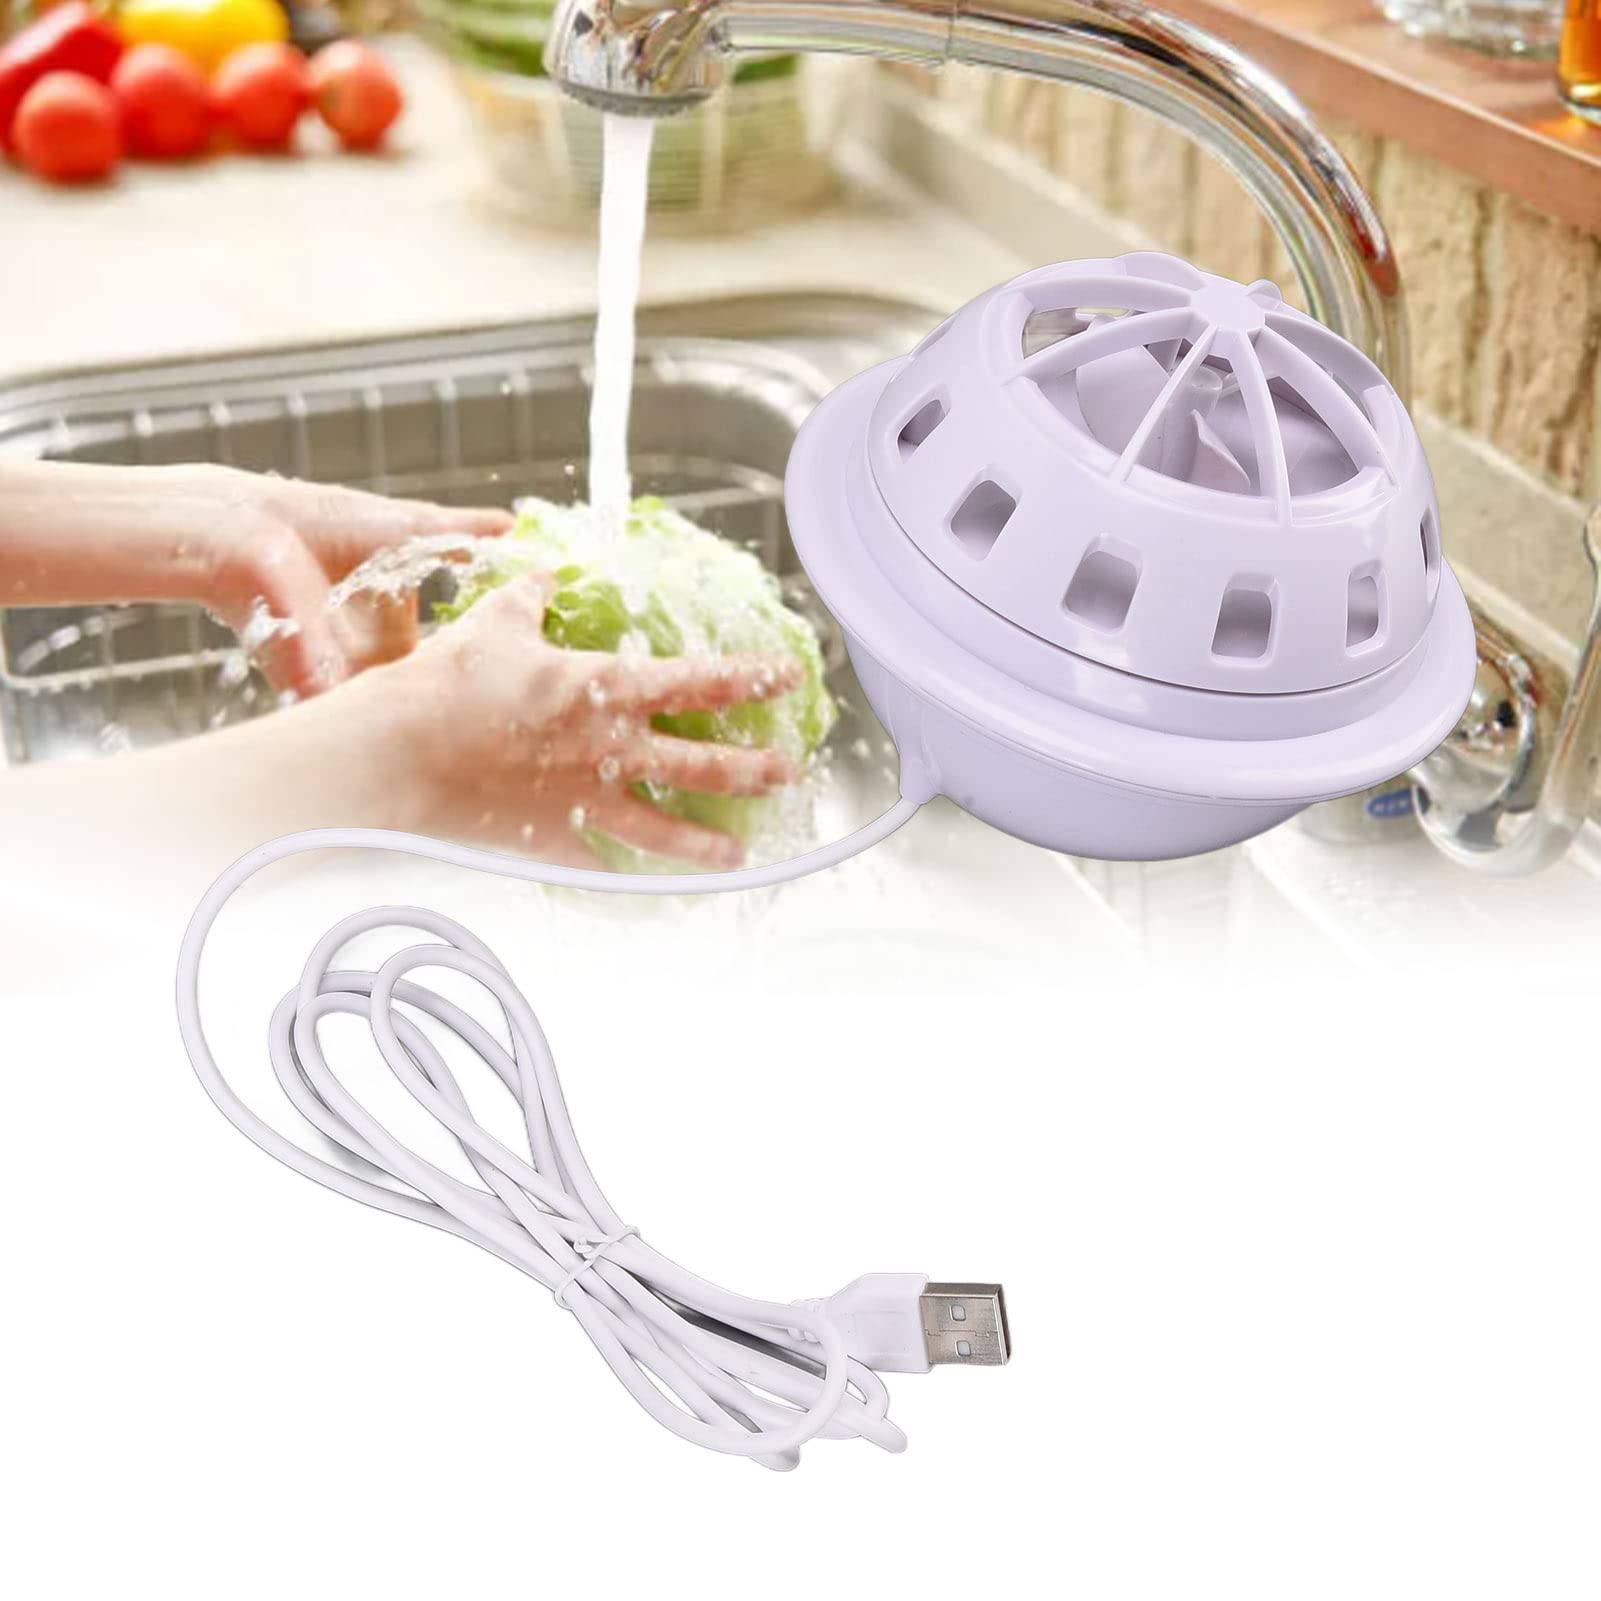 Mini Ultrasonic Dishwasher, Kitchen Sink Fruit Dishwasher for Home Business Travel College Room RV Apartment(white)